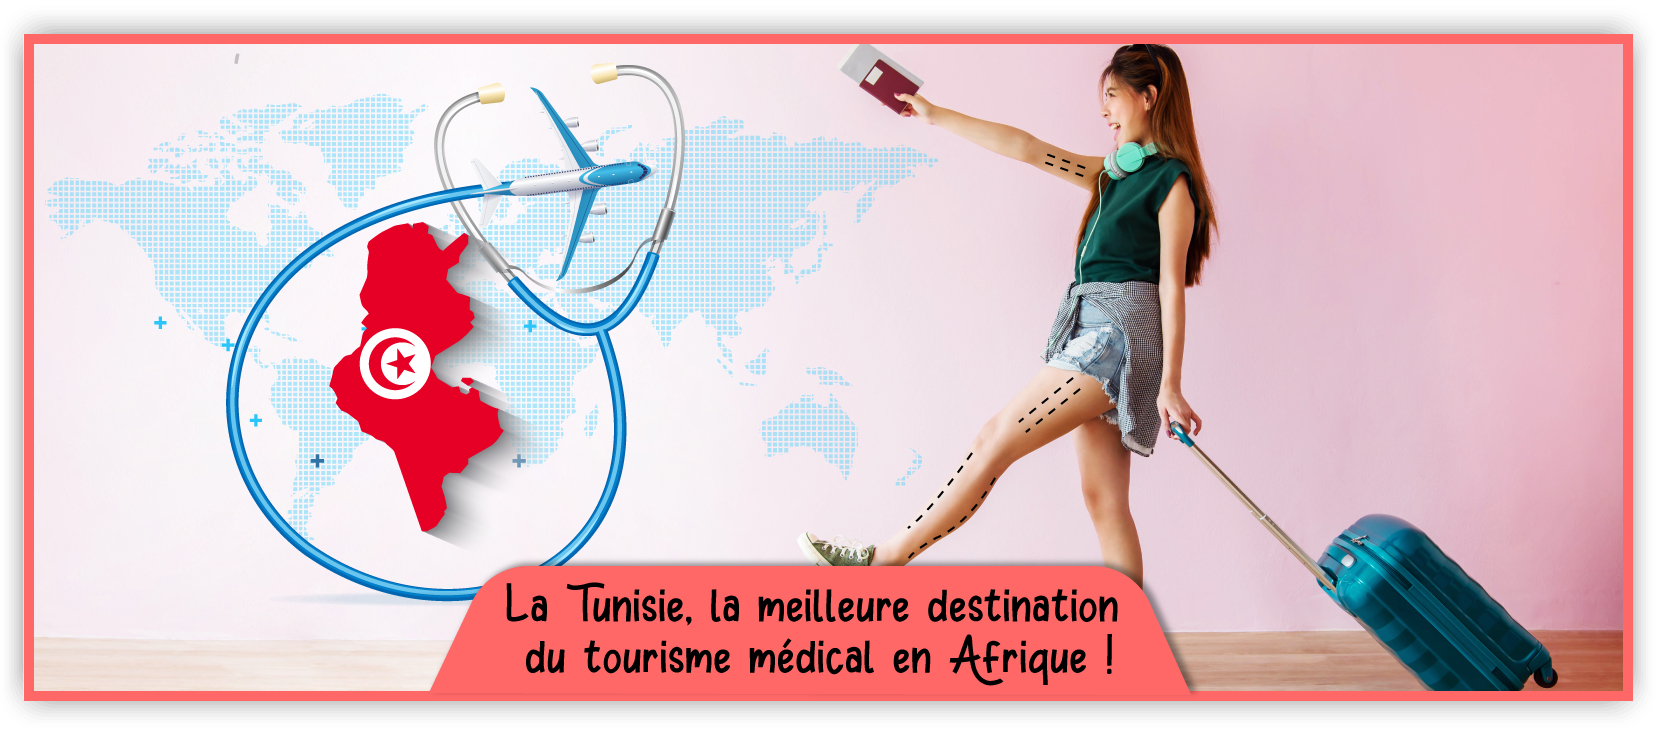 tourisme medical tunisie slide 1